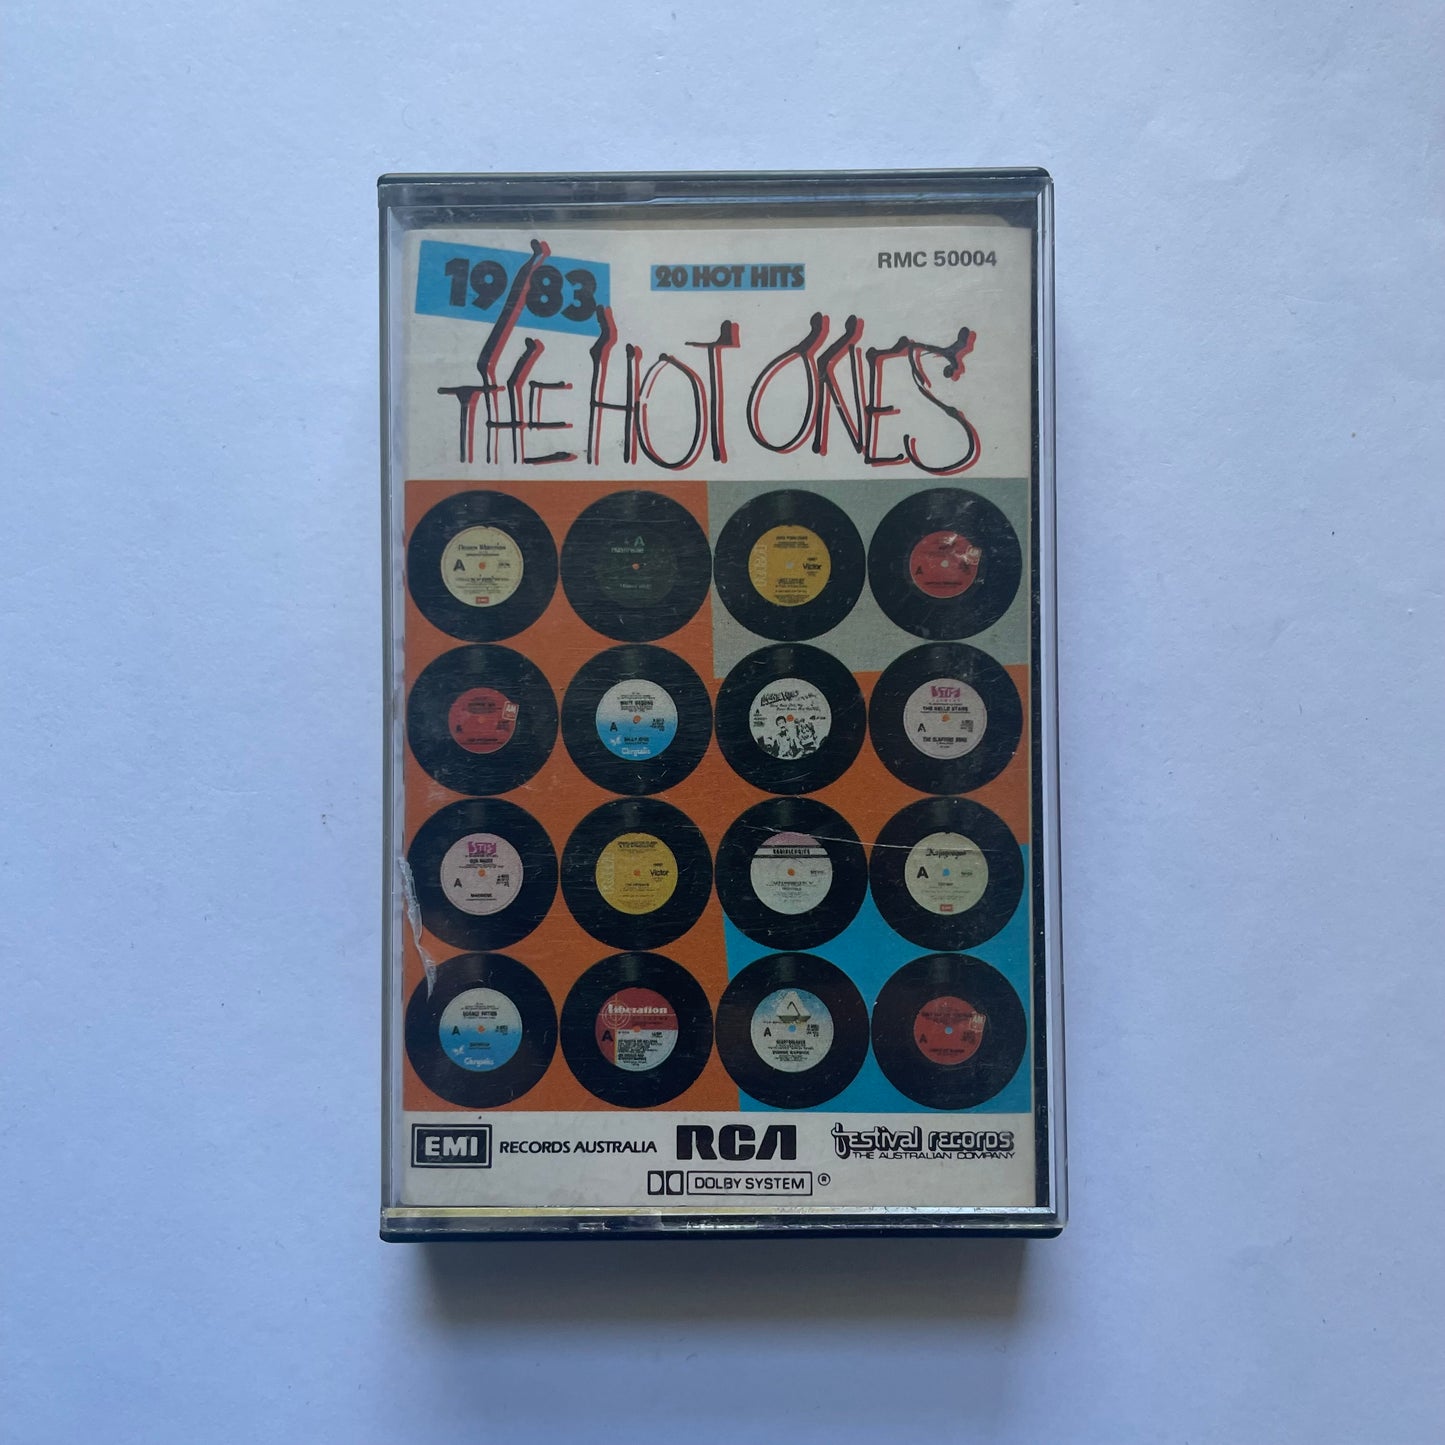 Tape  Cassette the hot ones 1983